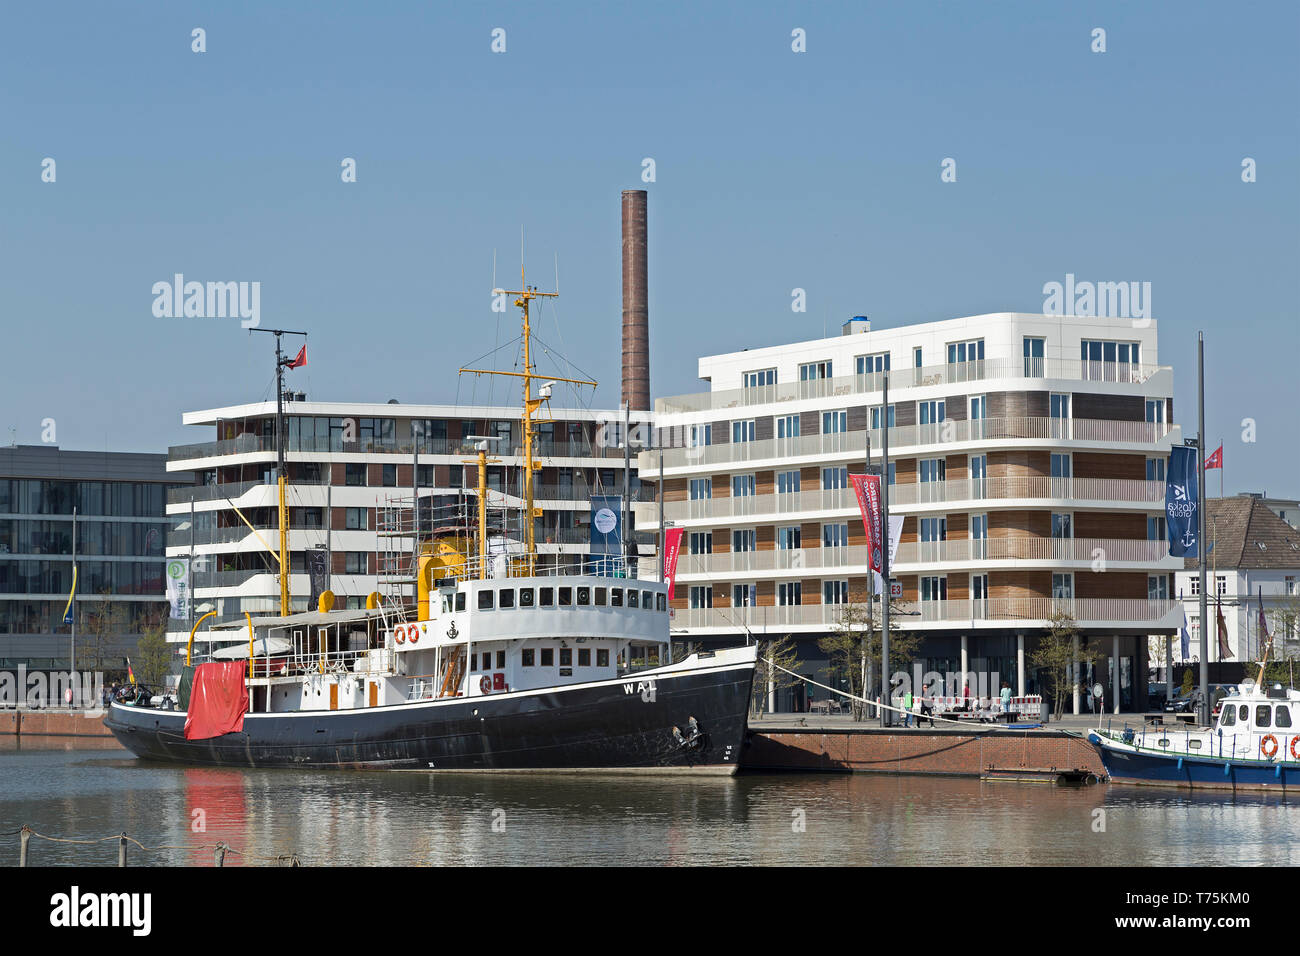 steam icebreaker Wal, New Harbour, Bremerhaven, Bremen, Germany Stock Photo